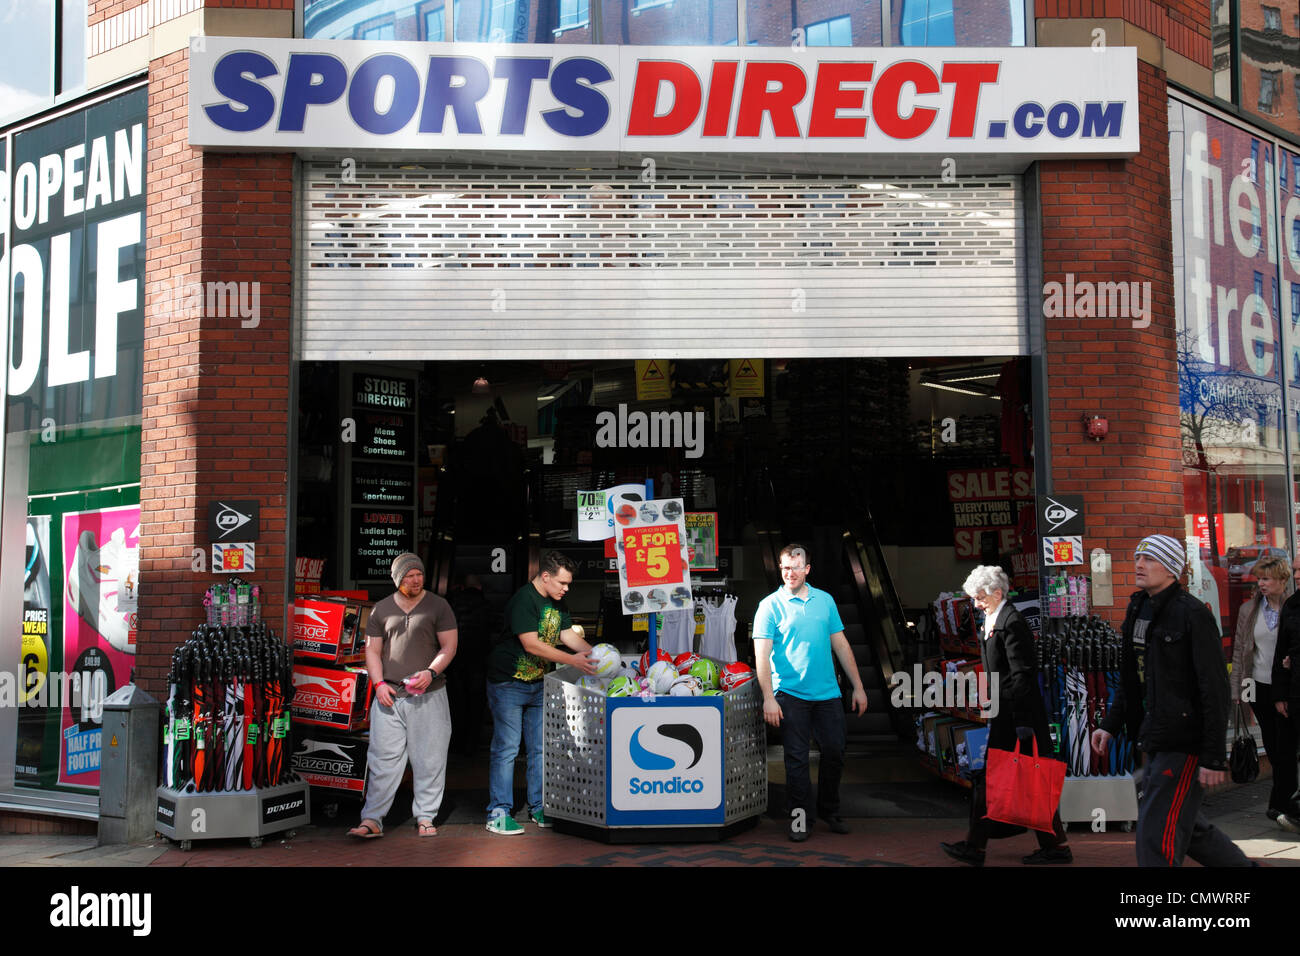 A Sports Direct.com store in Leeds, England, U.K. Stock Photo